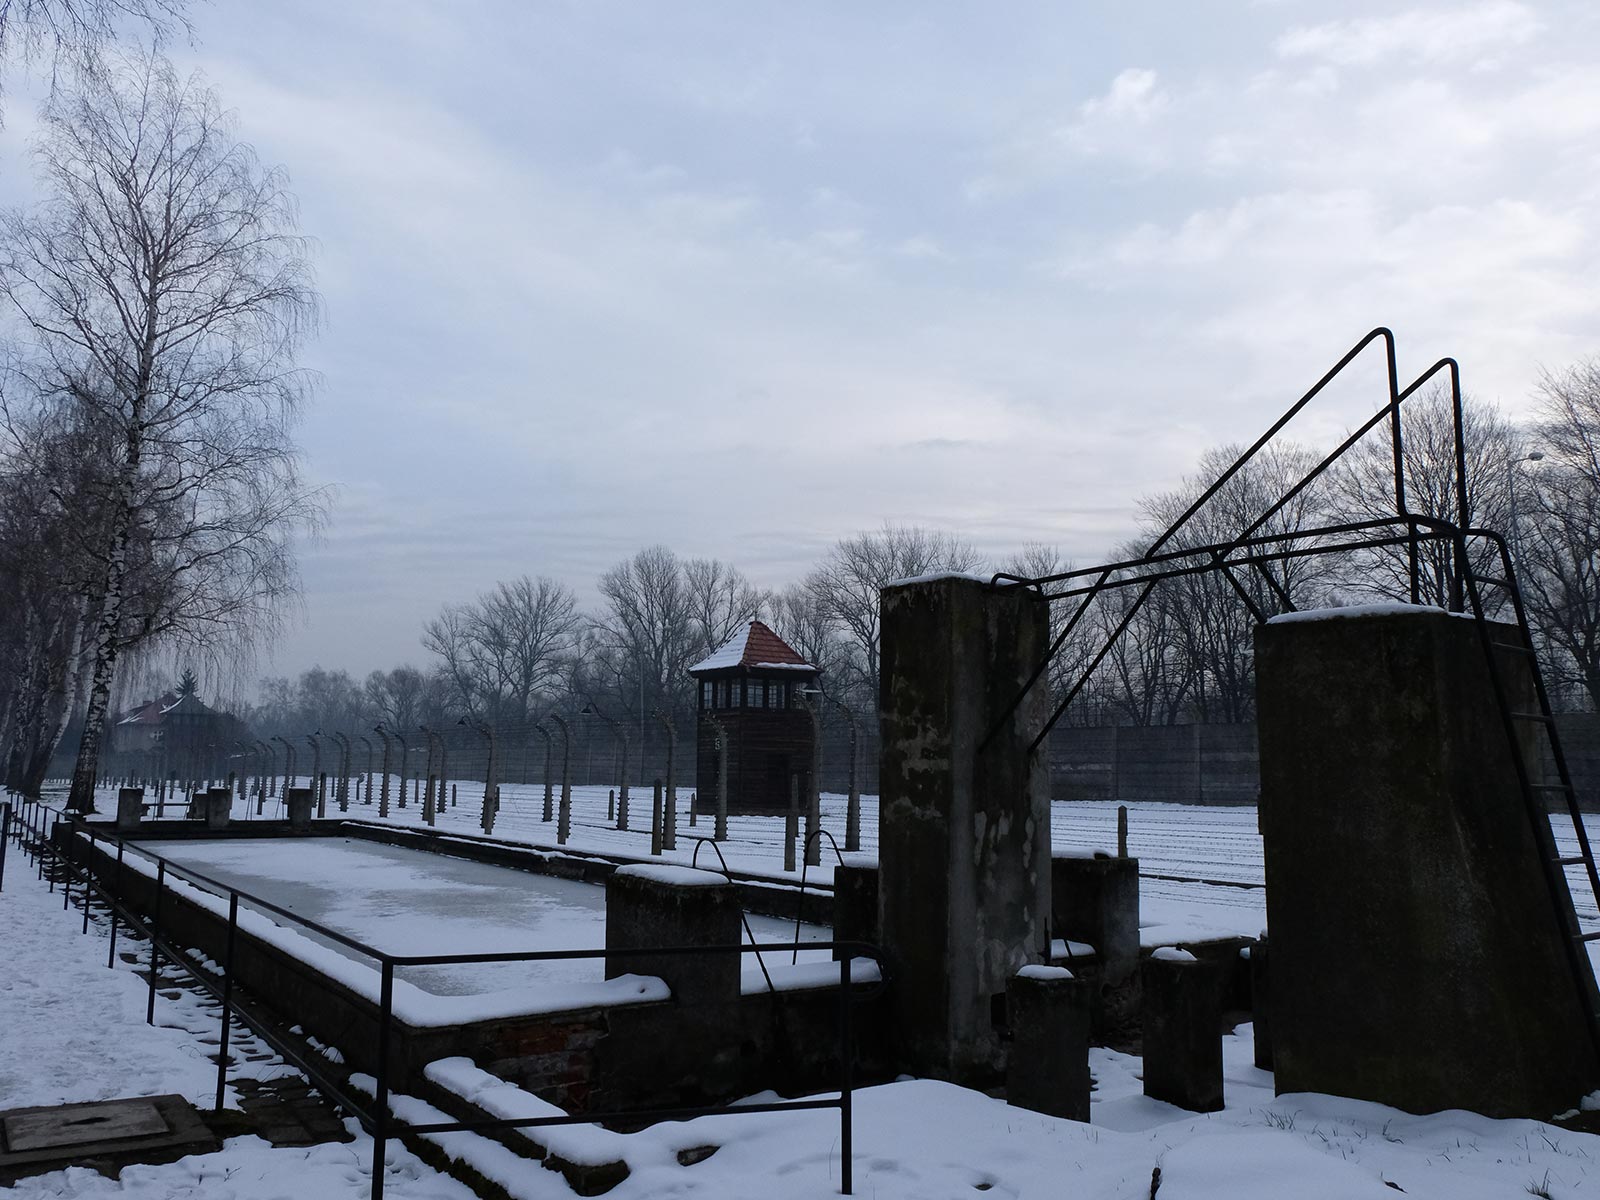 Swimming pool for Nazi officers in Auschwitz, Oświęcim, Poland. Mixed feelings in Auschwitz